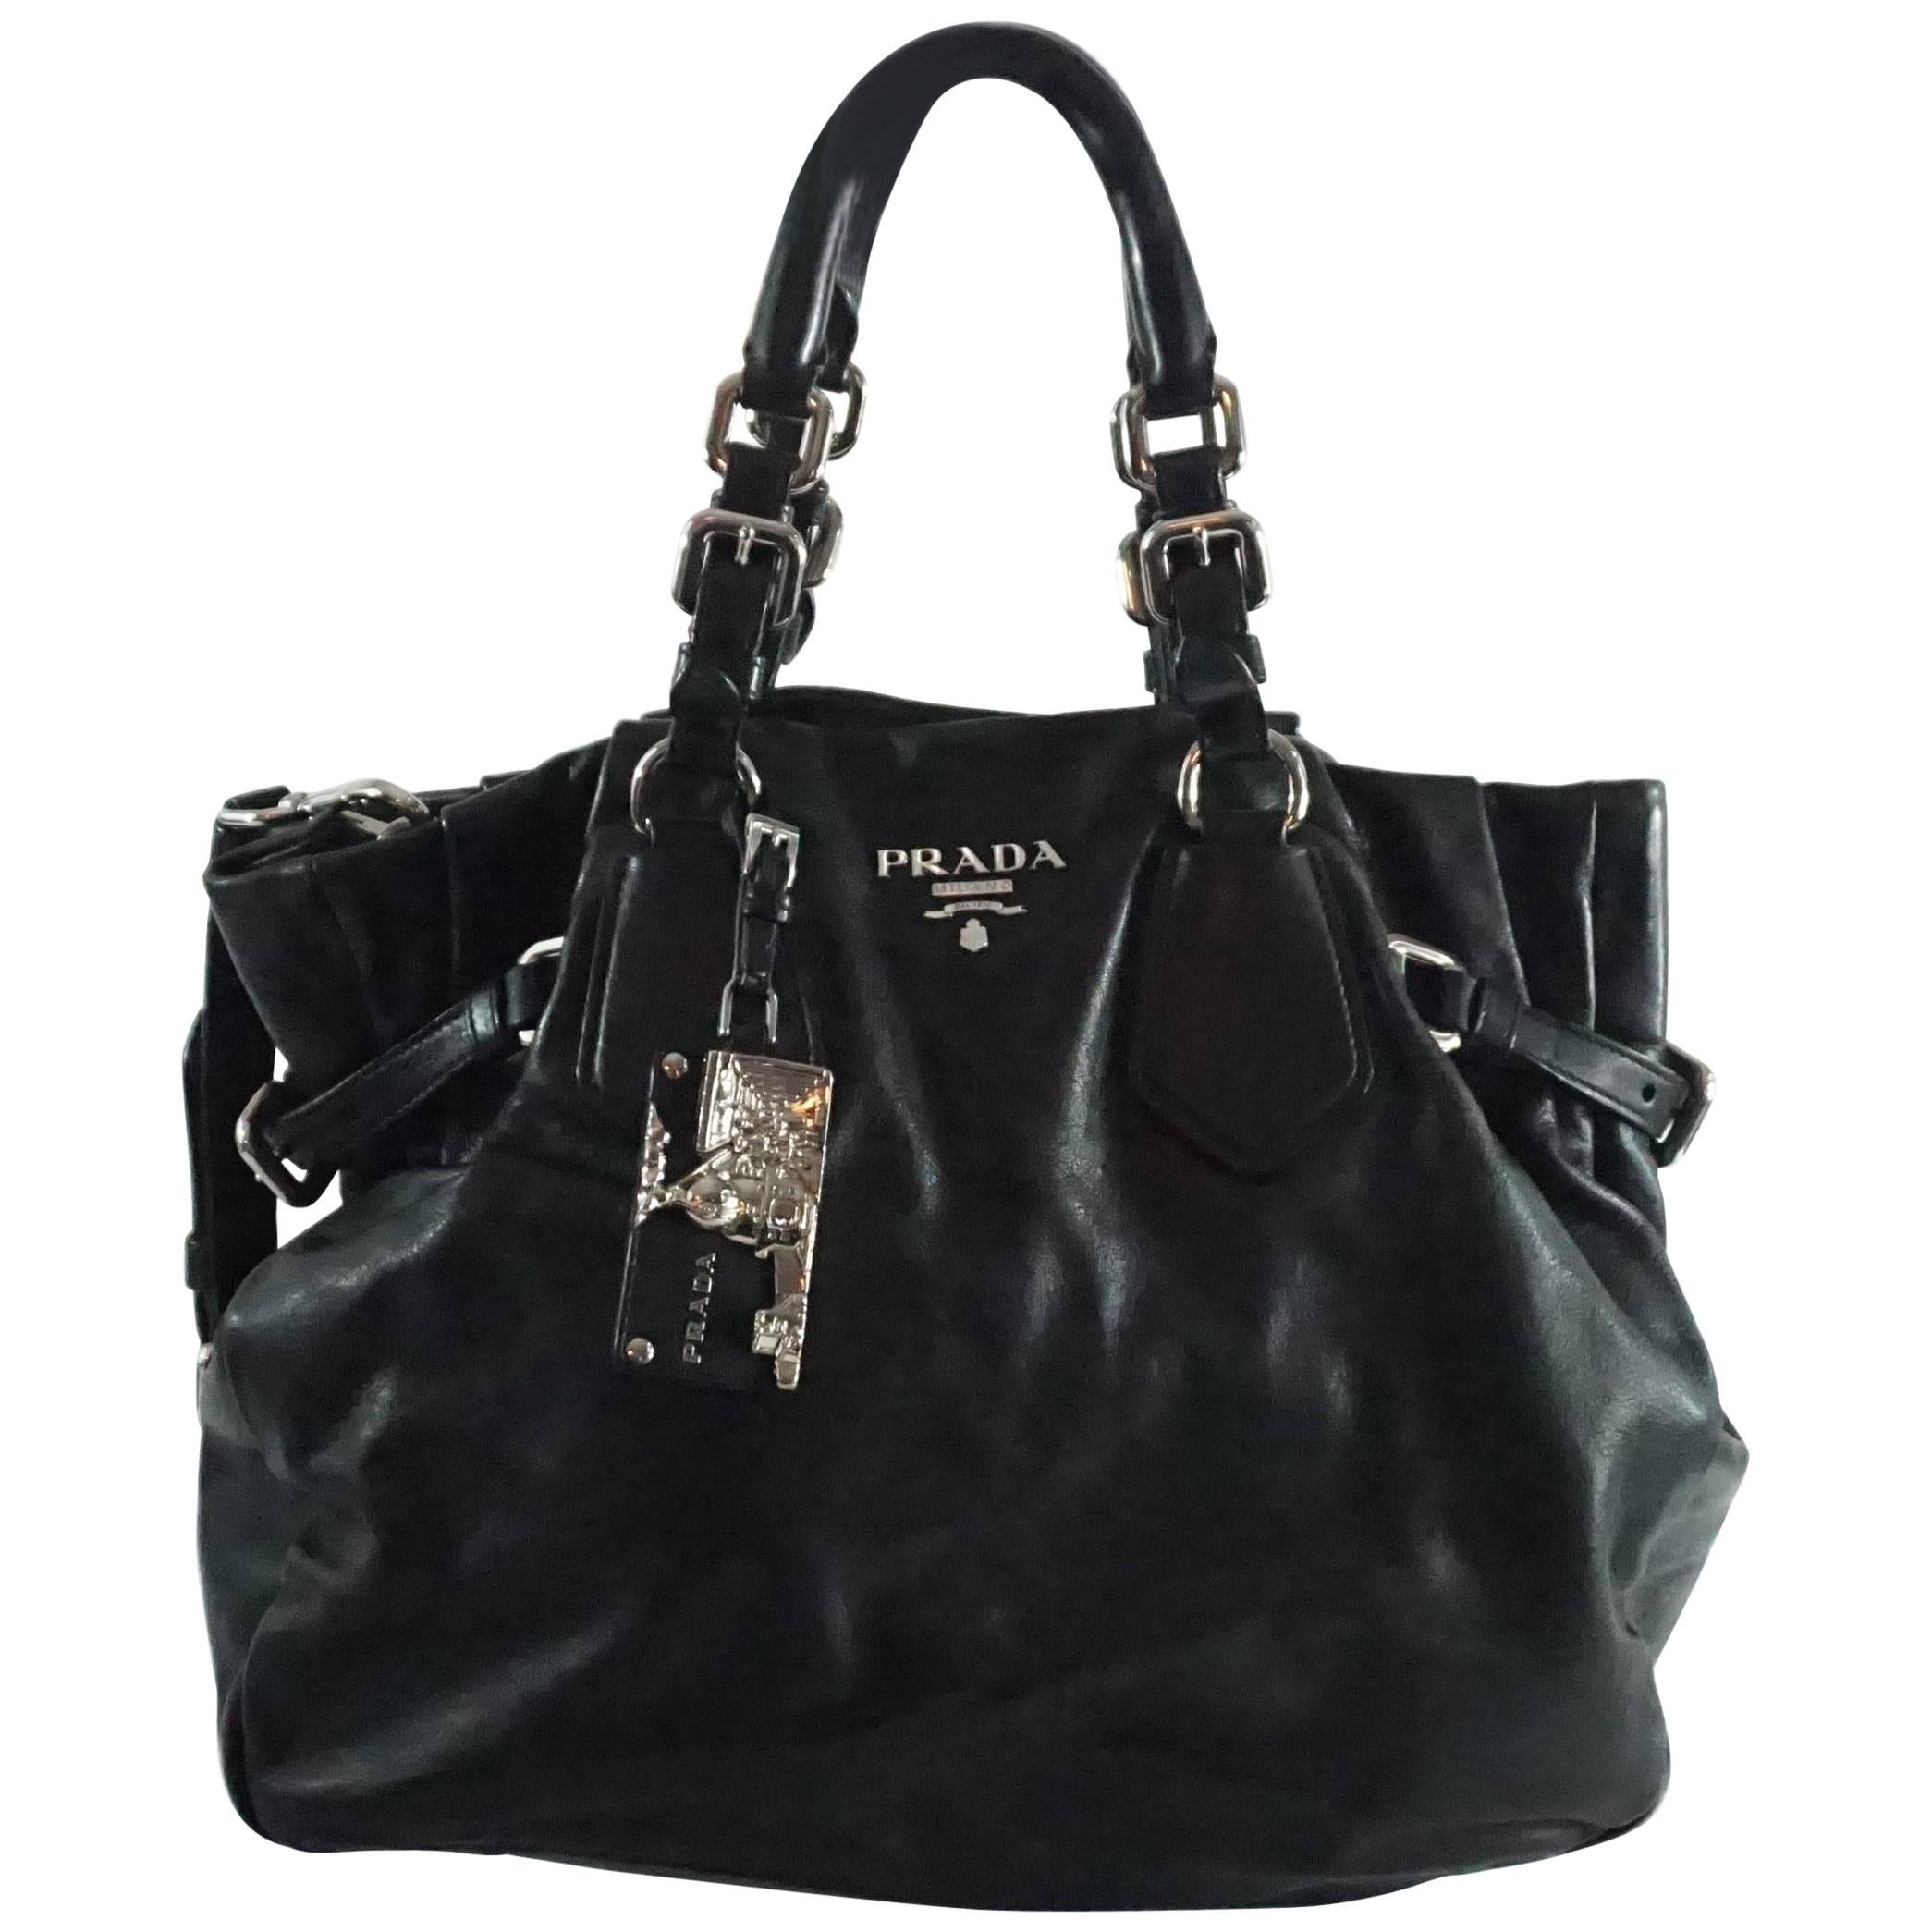 Prada Black Leather Shoulder Bag with Crossbody Strap and Charm - SHW -